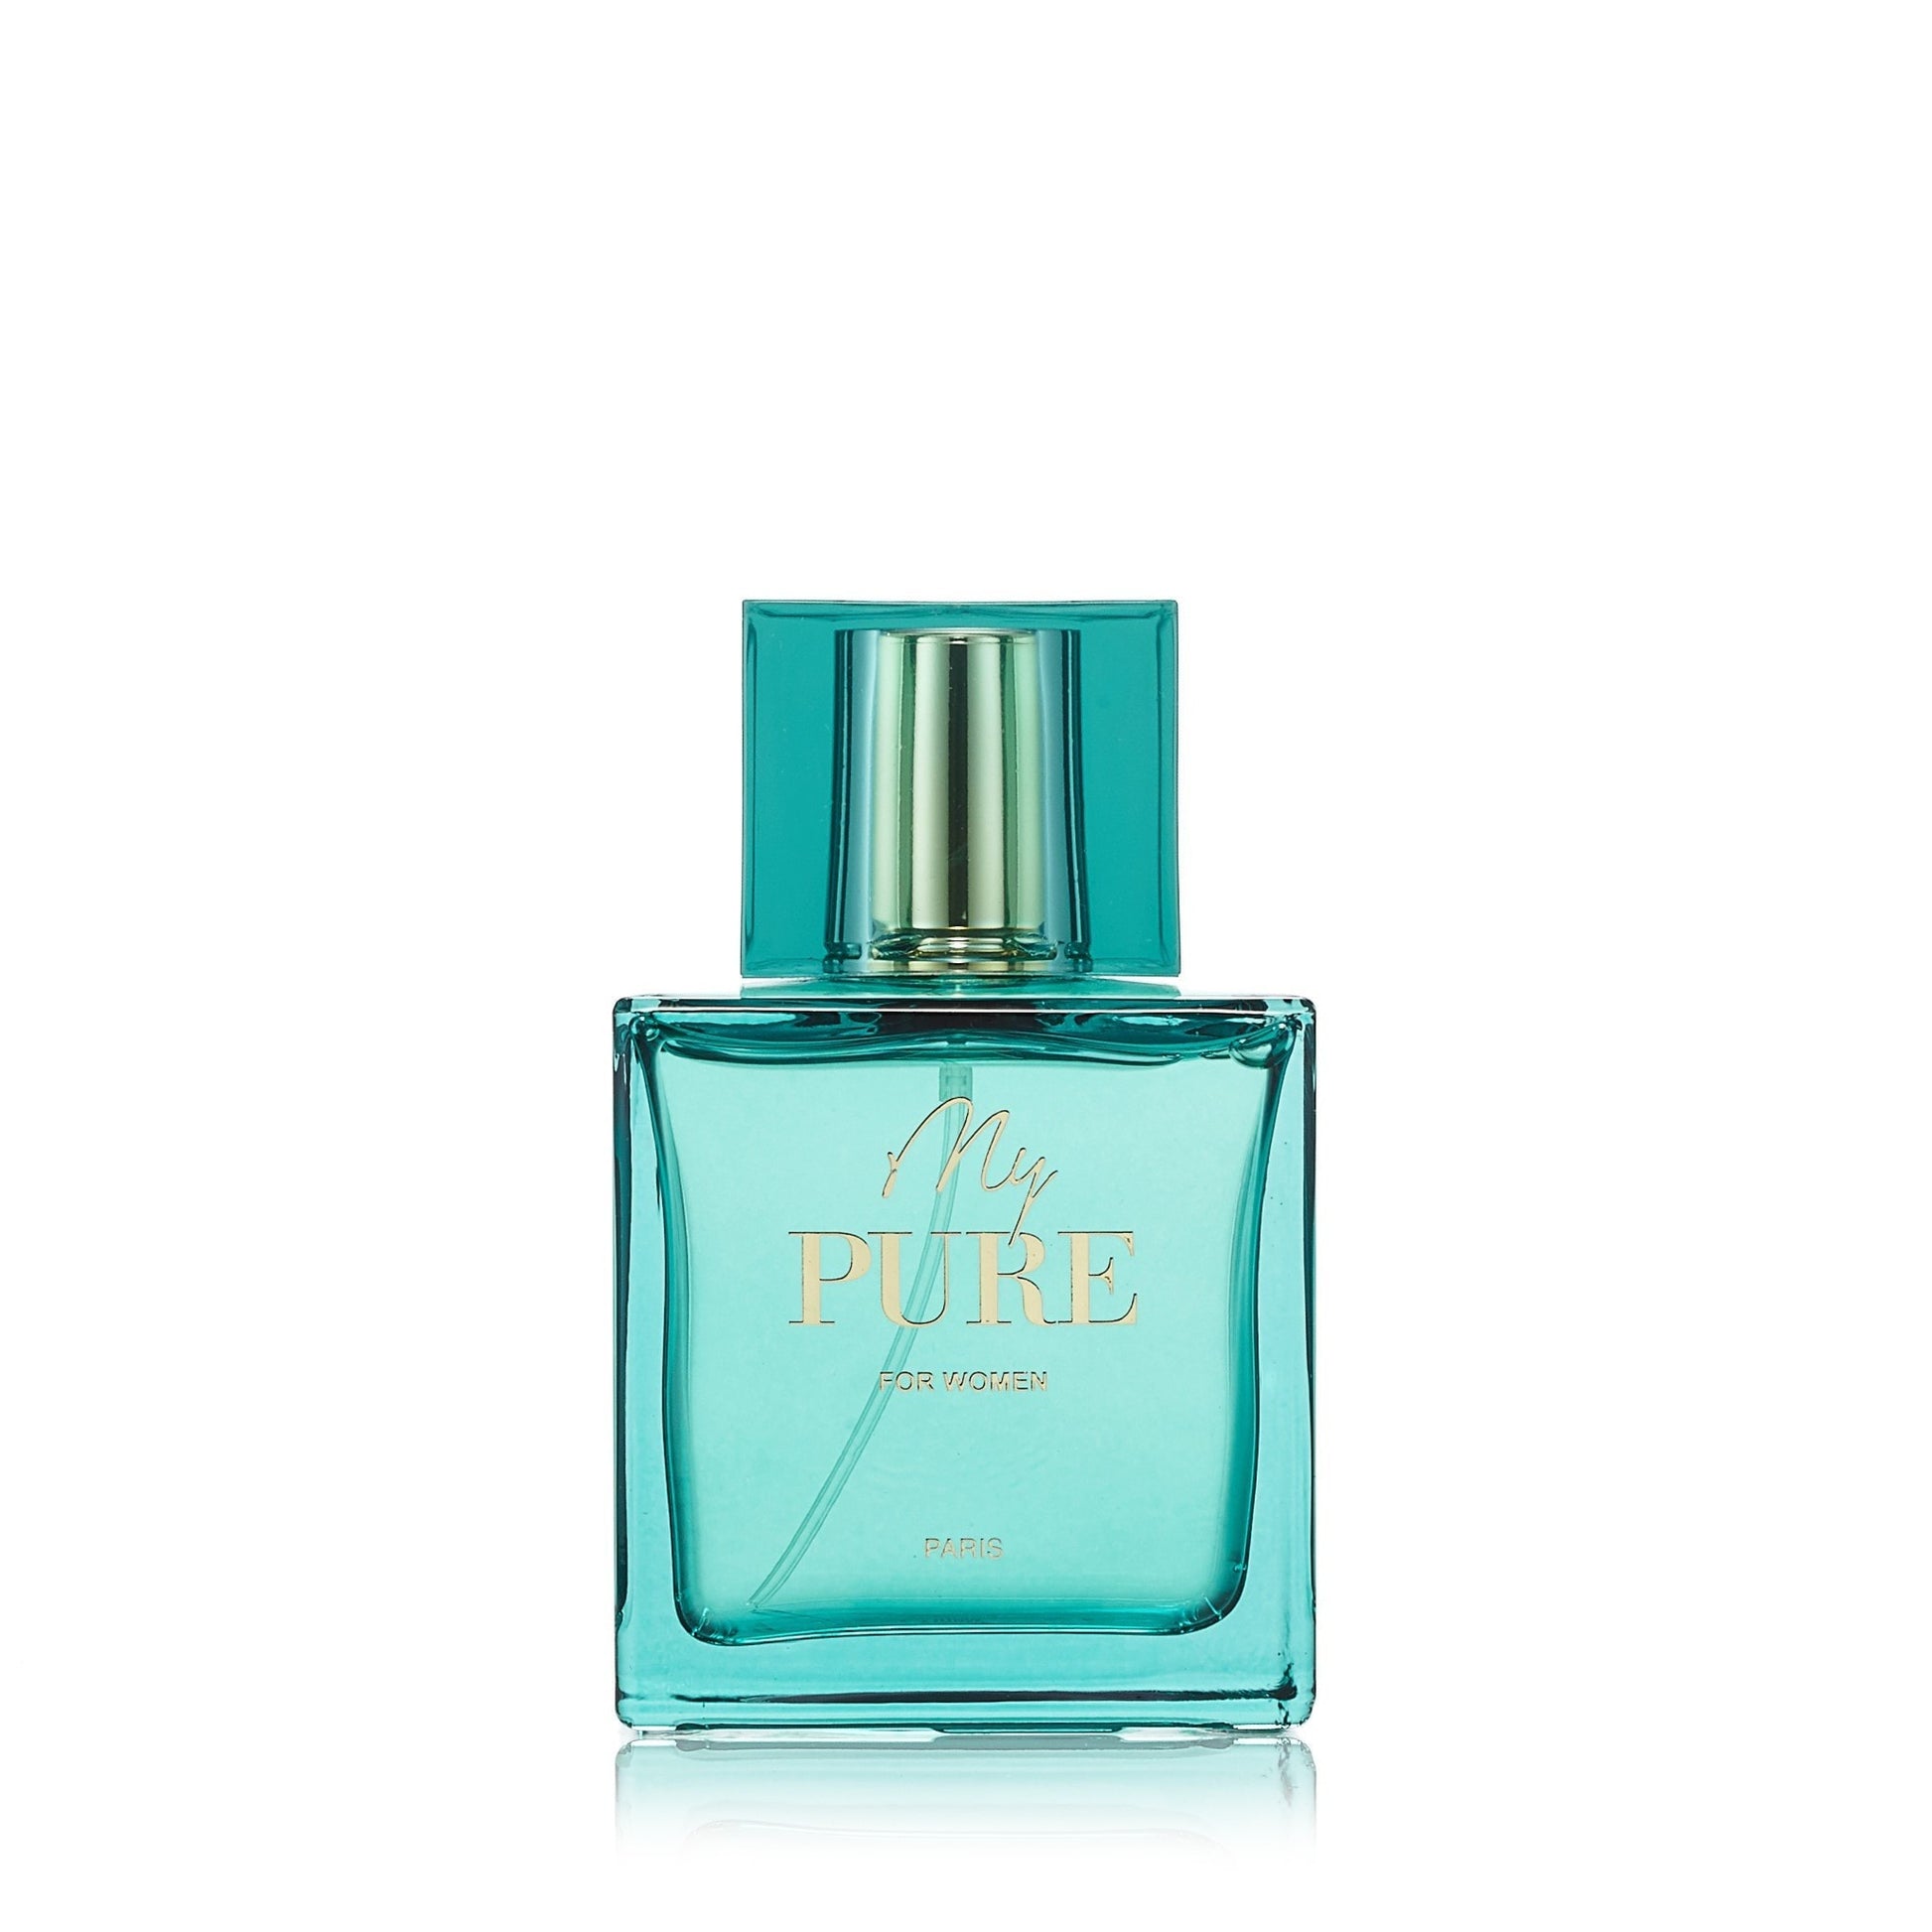 My Pure Eau de Parfum Spray for Women Karen Low 3.4 oz. Click to open in modal